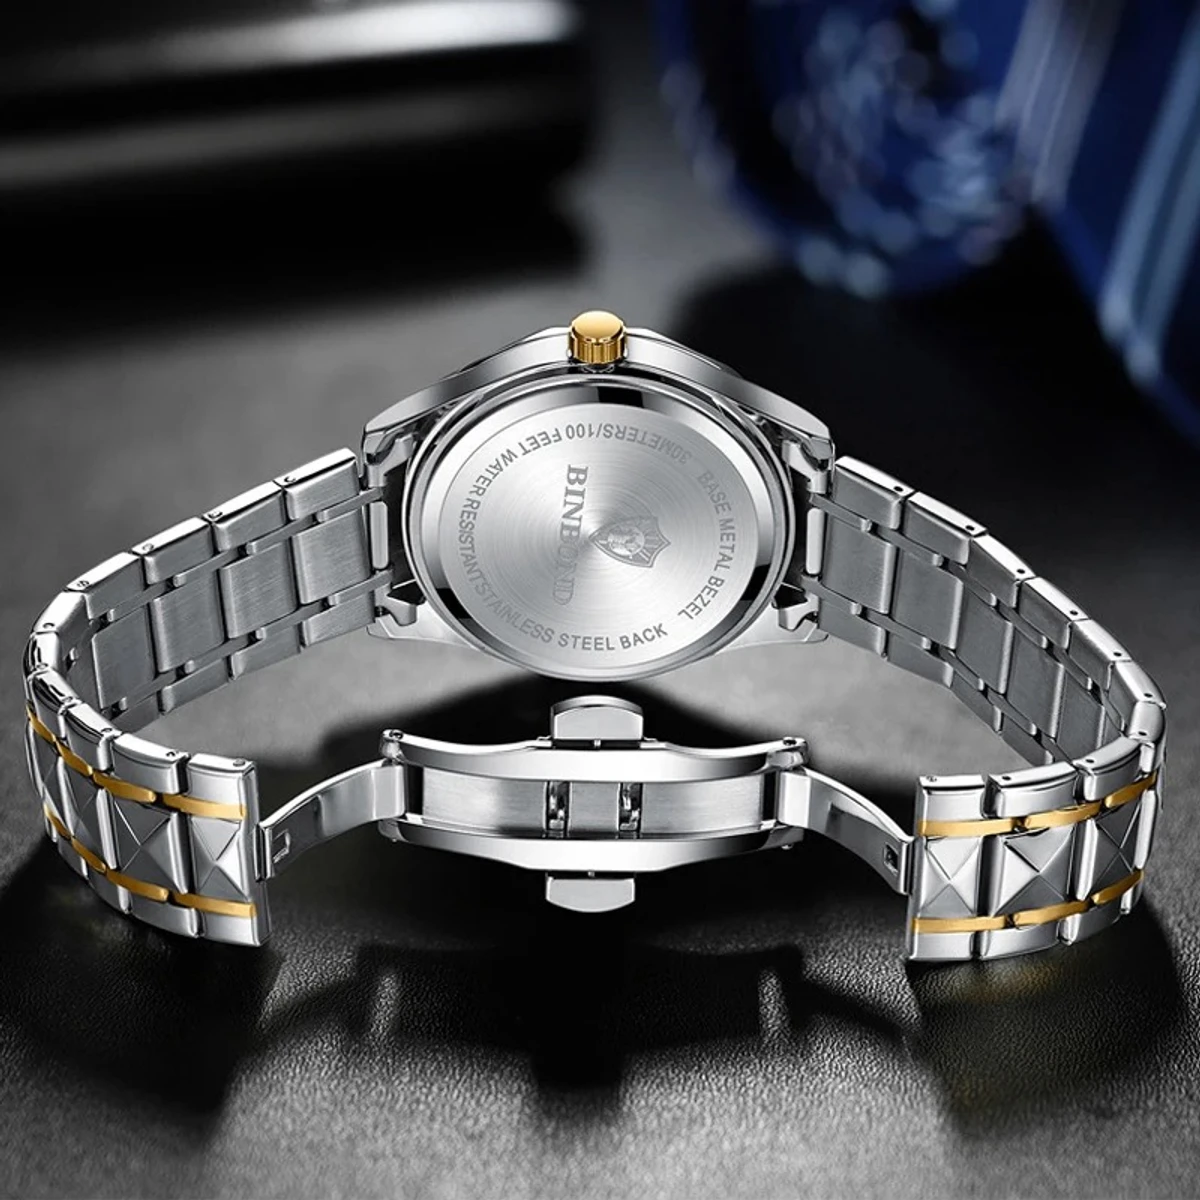 Luxury Binbond authentic men's watch waterproof night light dual calendar watch men's quartz watch diamond ceiling glass- Blue.